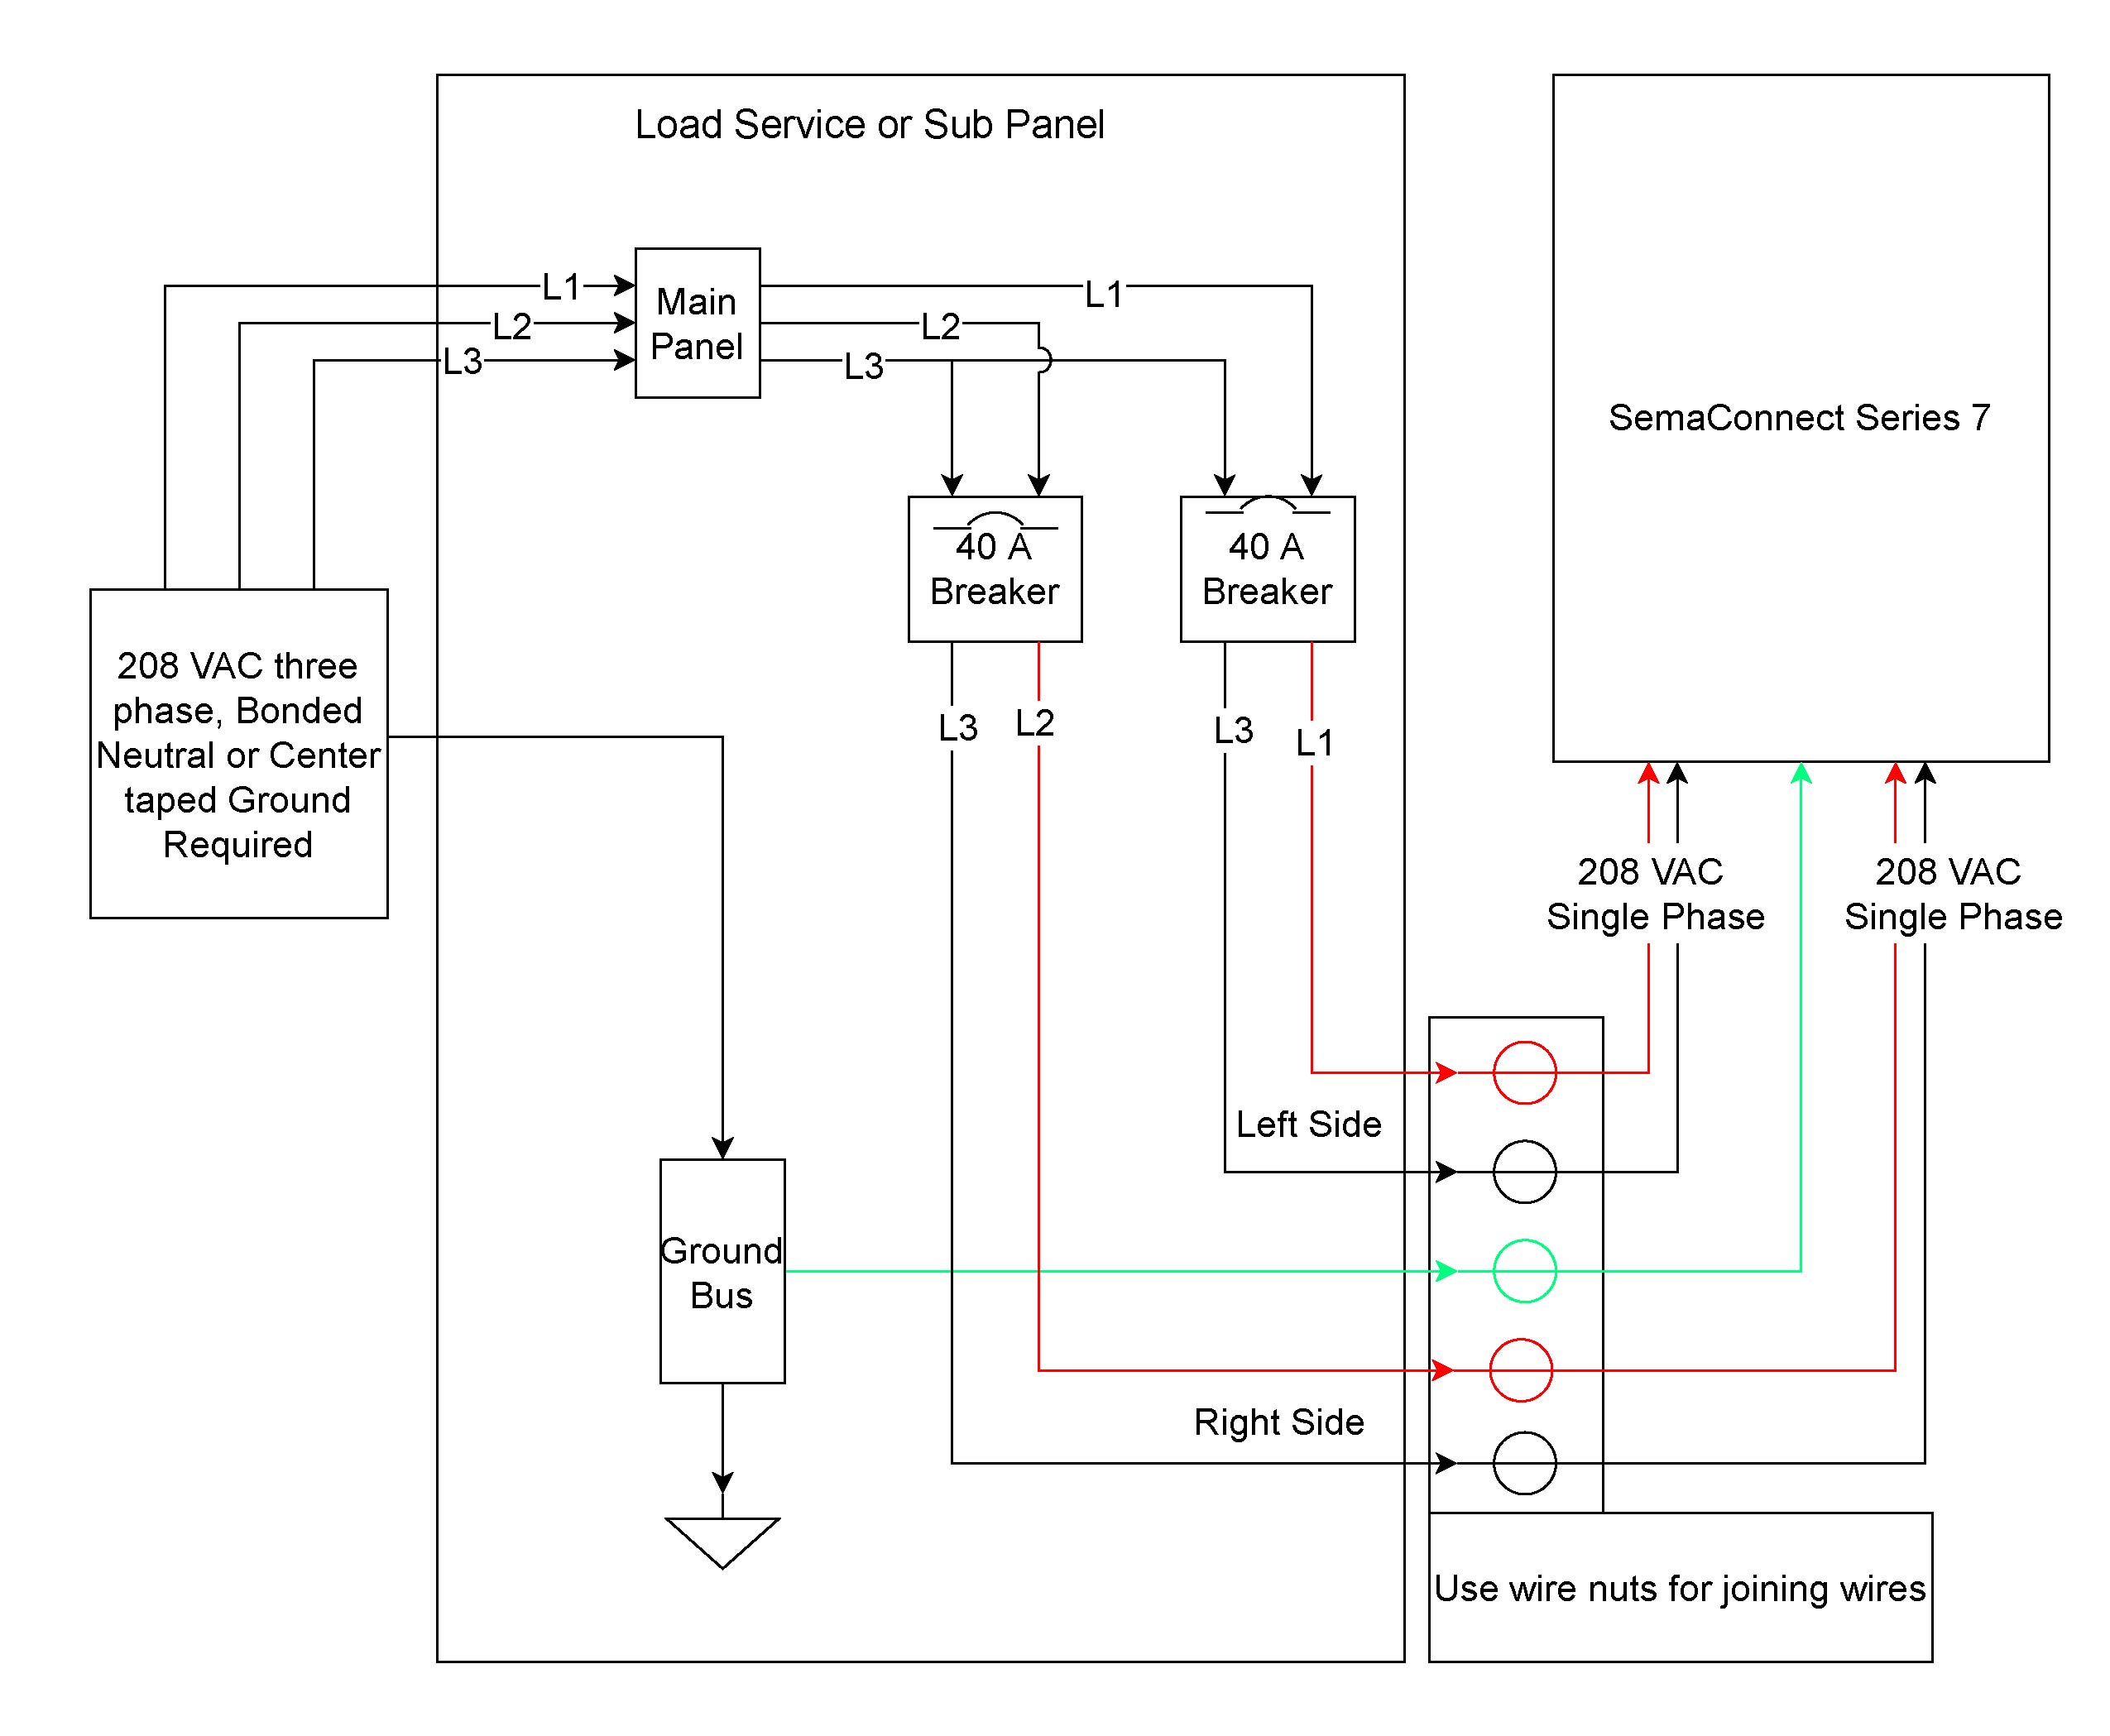 lima vr3 wiring diagram